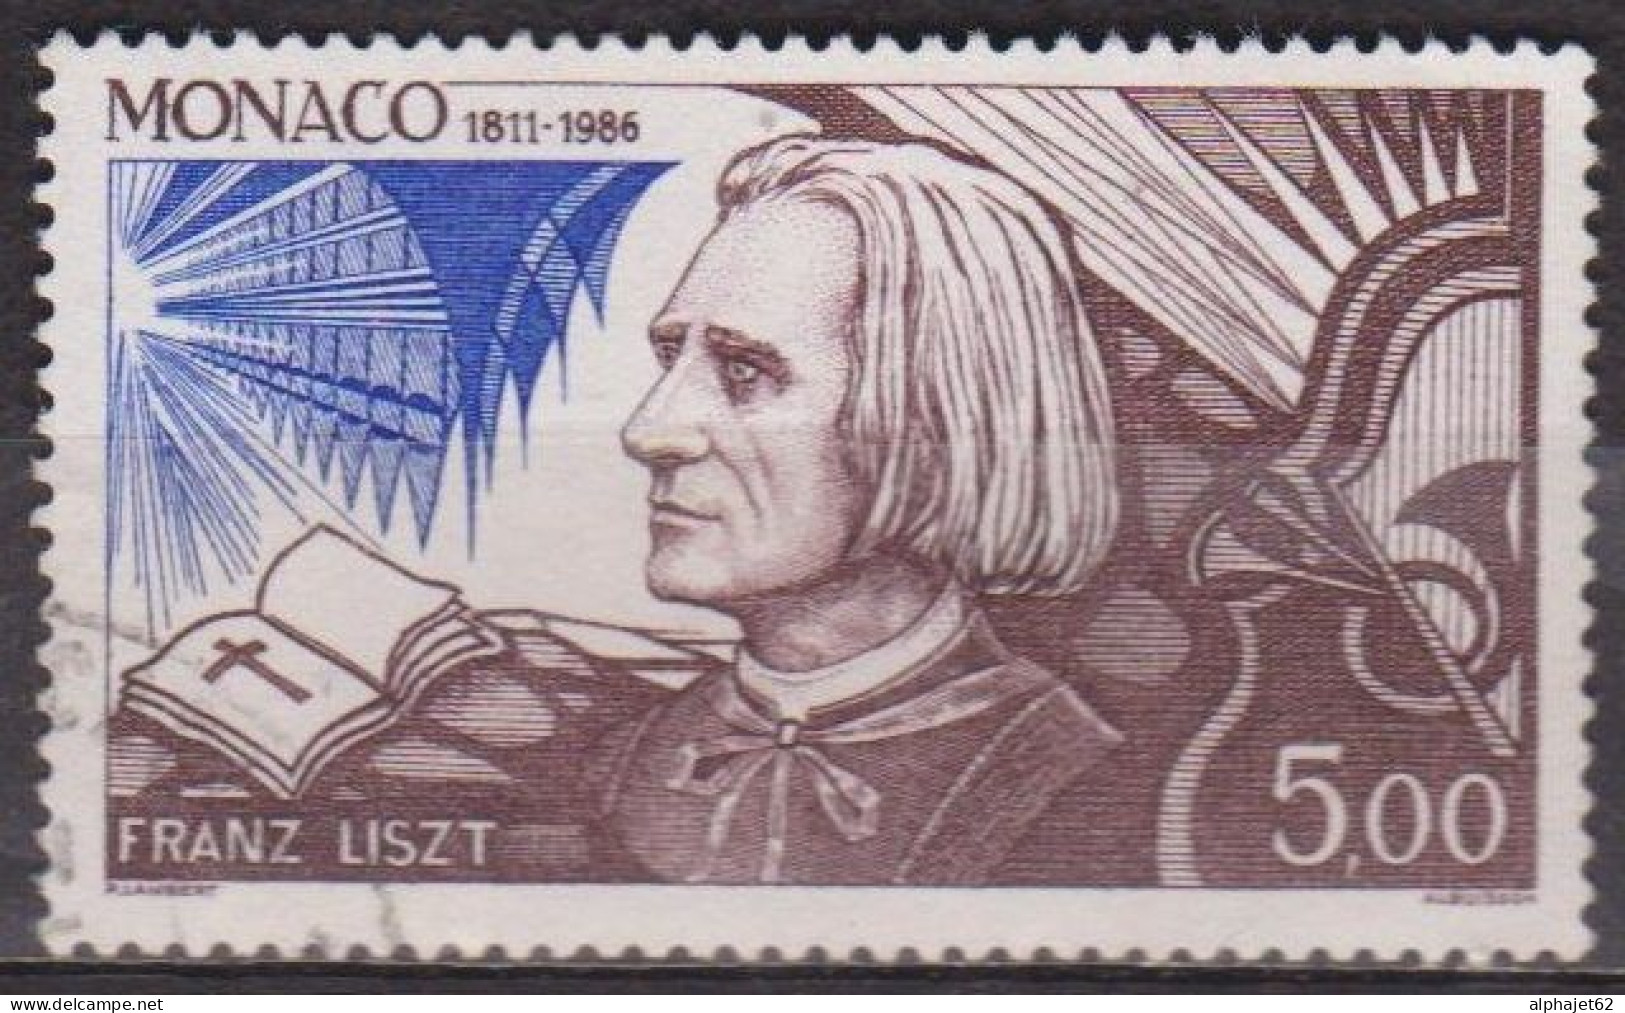 Musque - MONACO - Franz Liszt, Compositeur - N° 1548 - 1986 - Usados